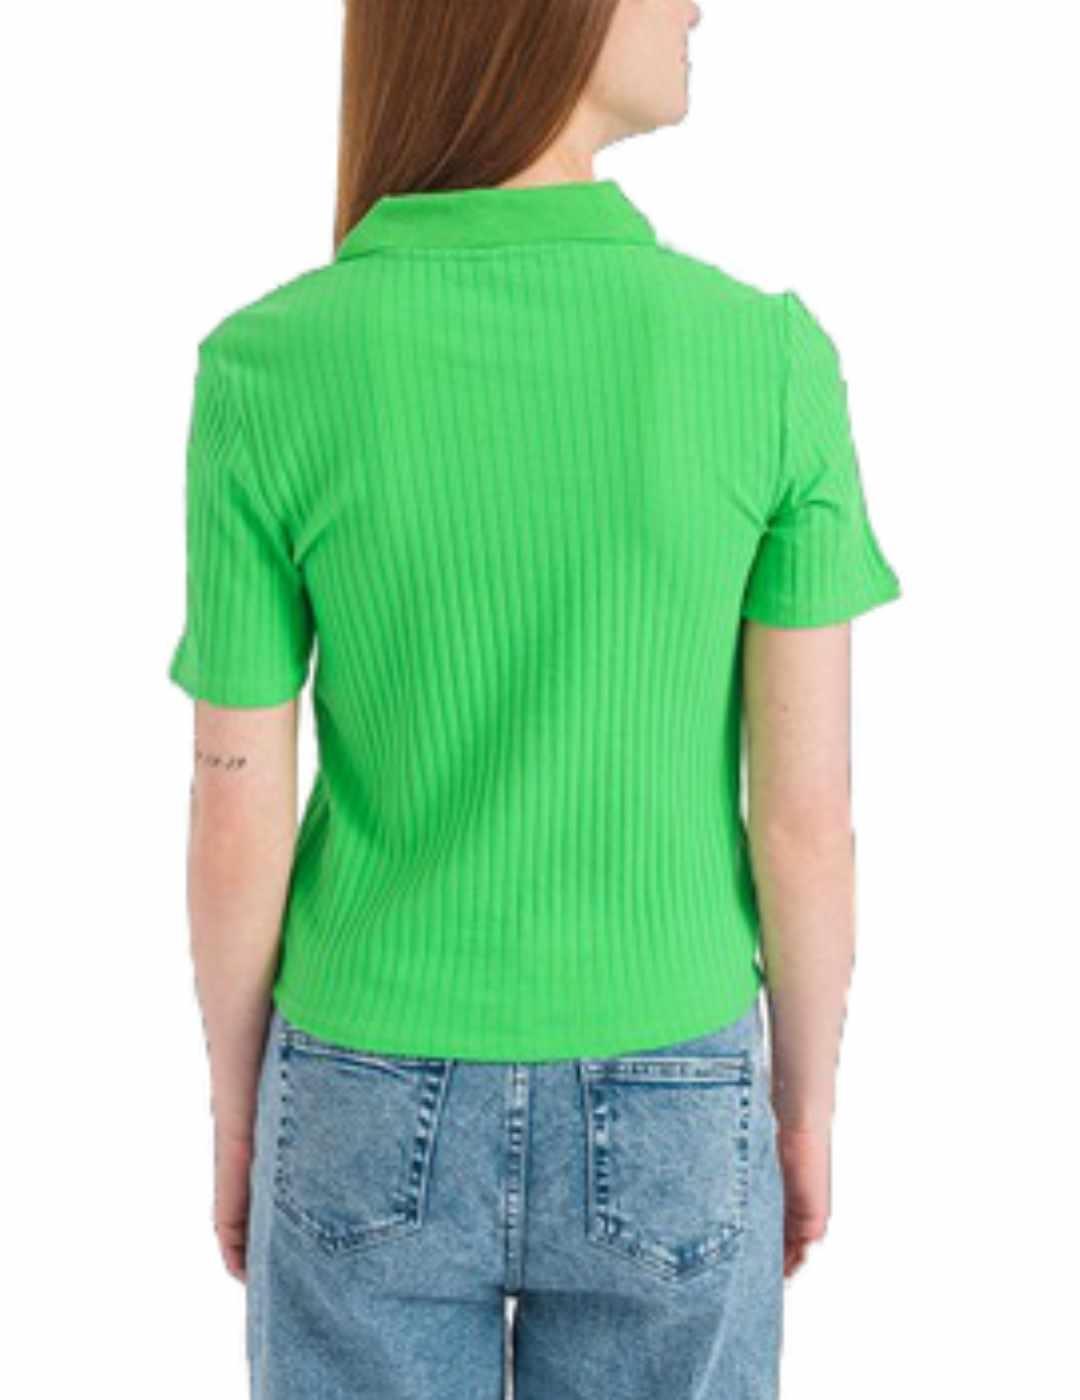  Polo Only Elsa  en color verde manga corta para mujer